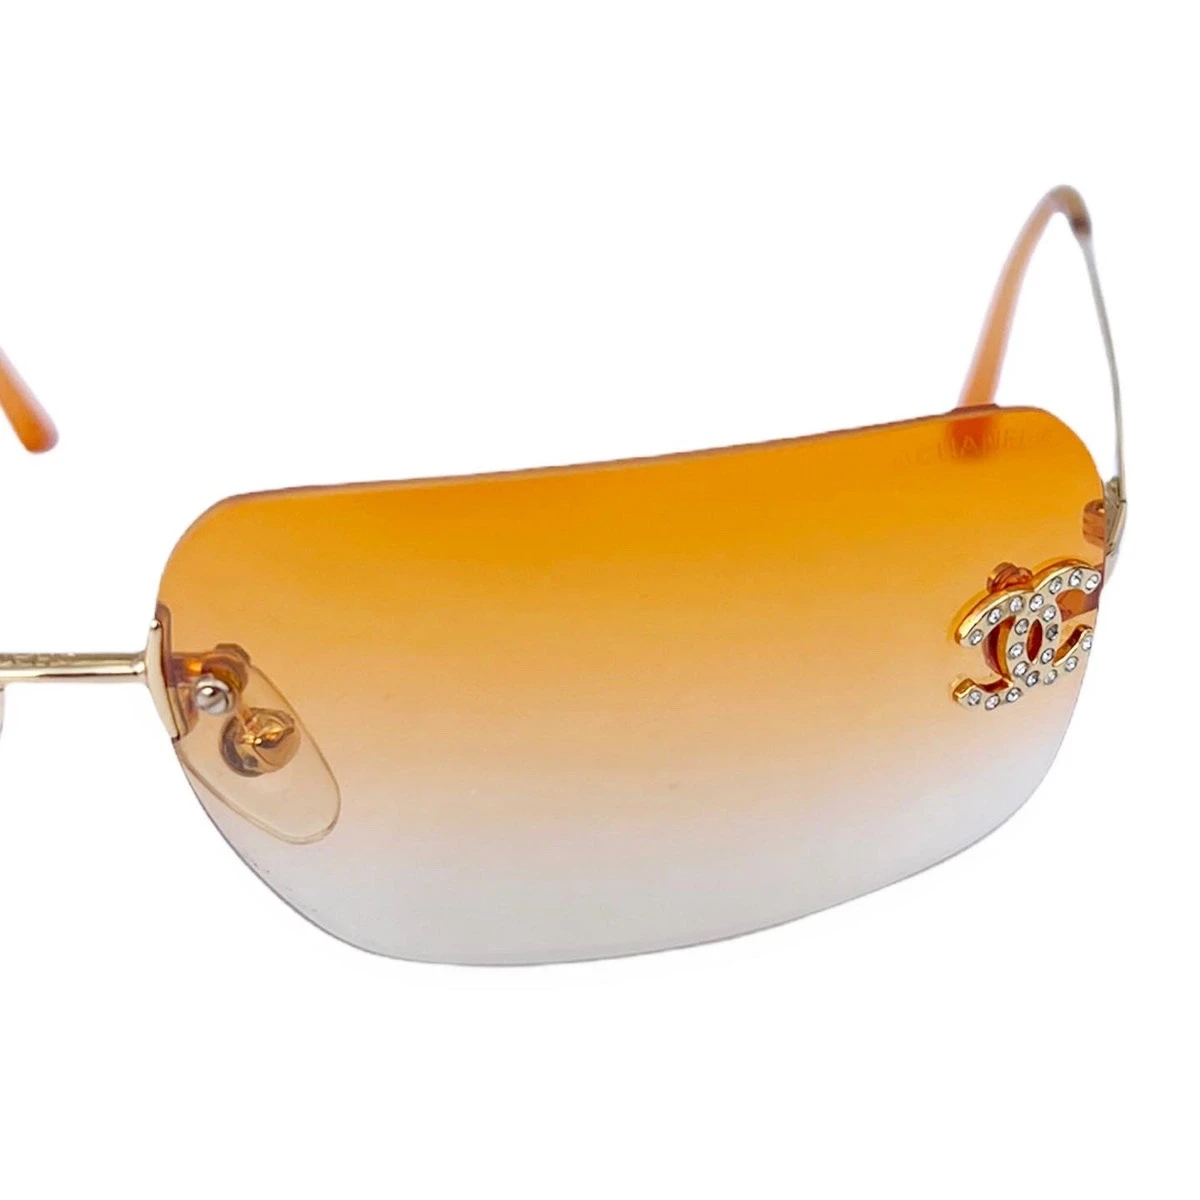 CHANEL, Accessories, Chanel Cc Logo Gold Orange Tinted Rhinestone  Swarovski Sunglasses 47d